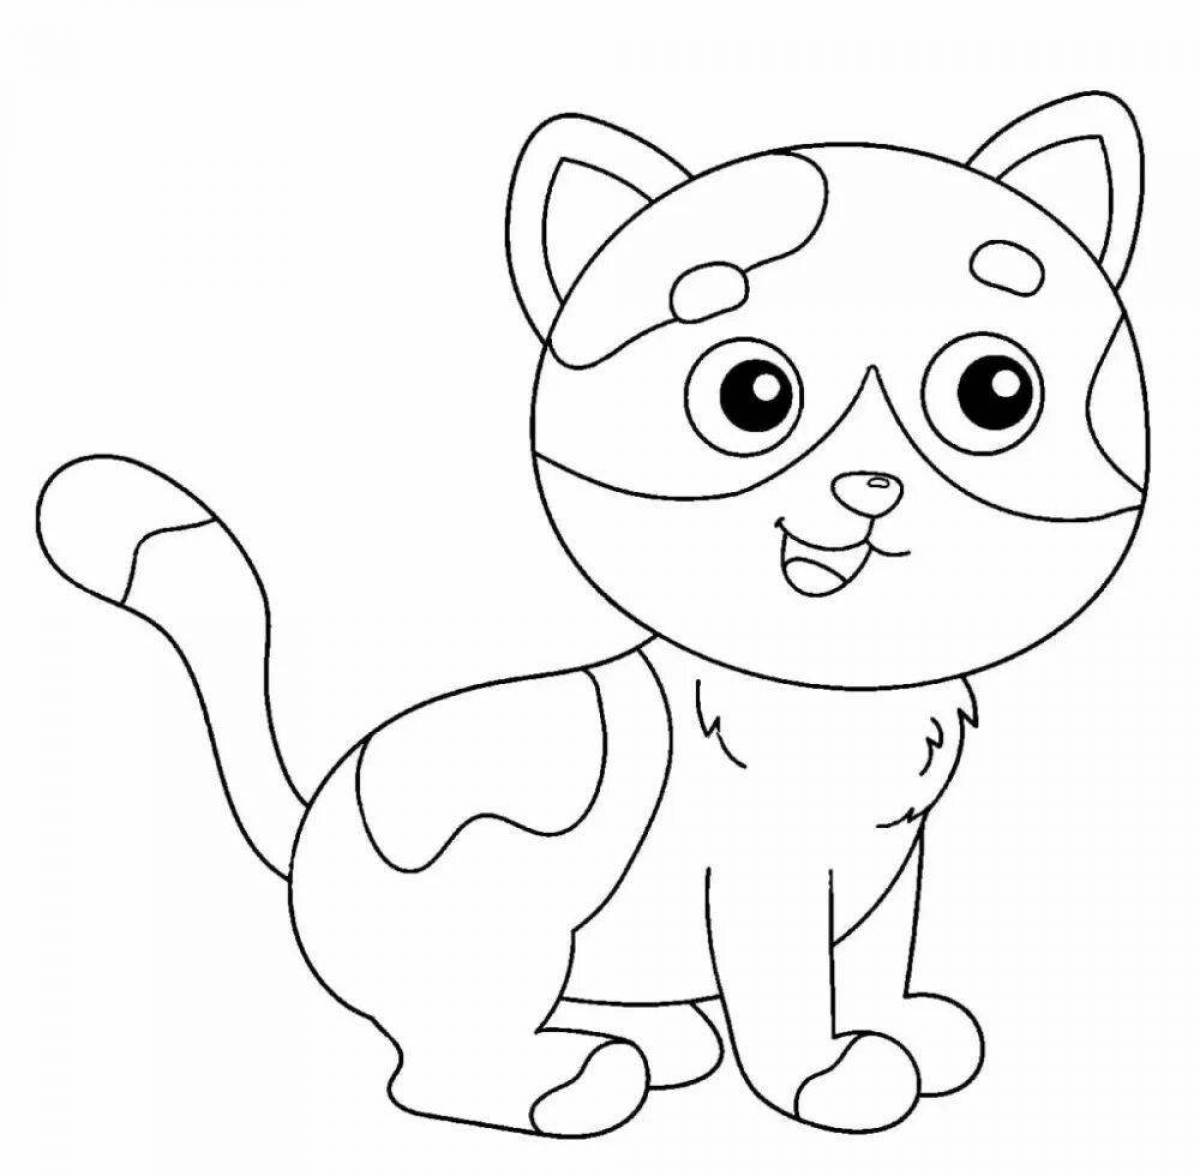 Coloring book cute cat bubu